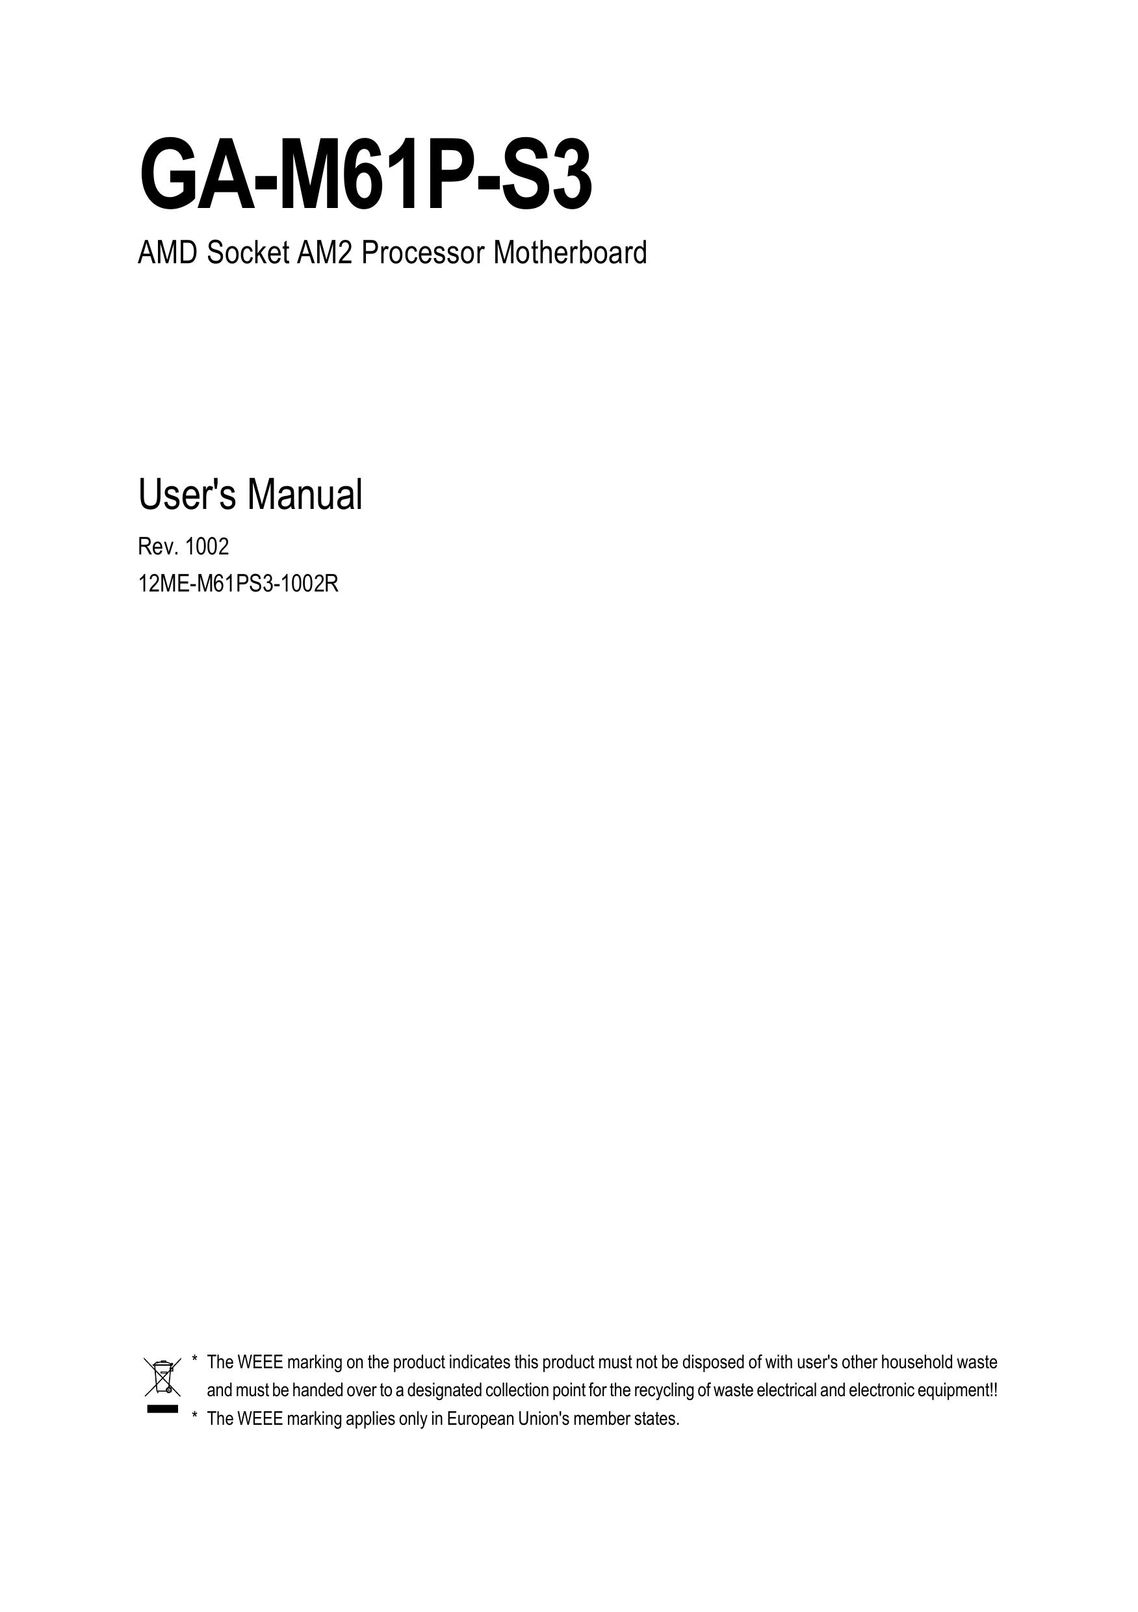 AMD 701P47156 Computer Hardware User Manual